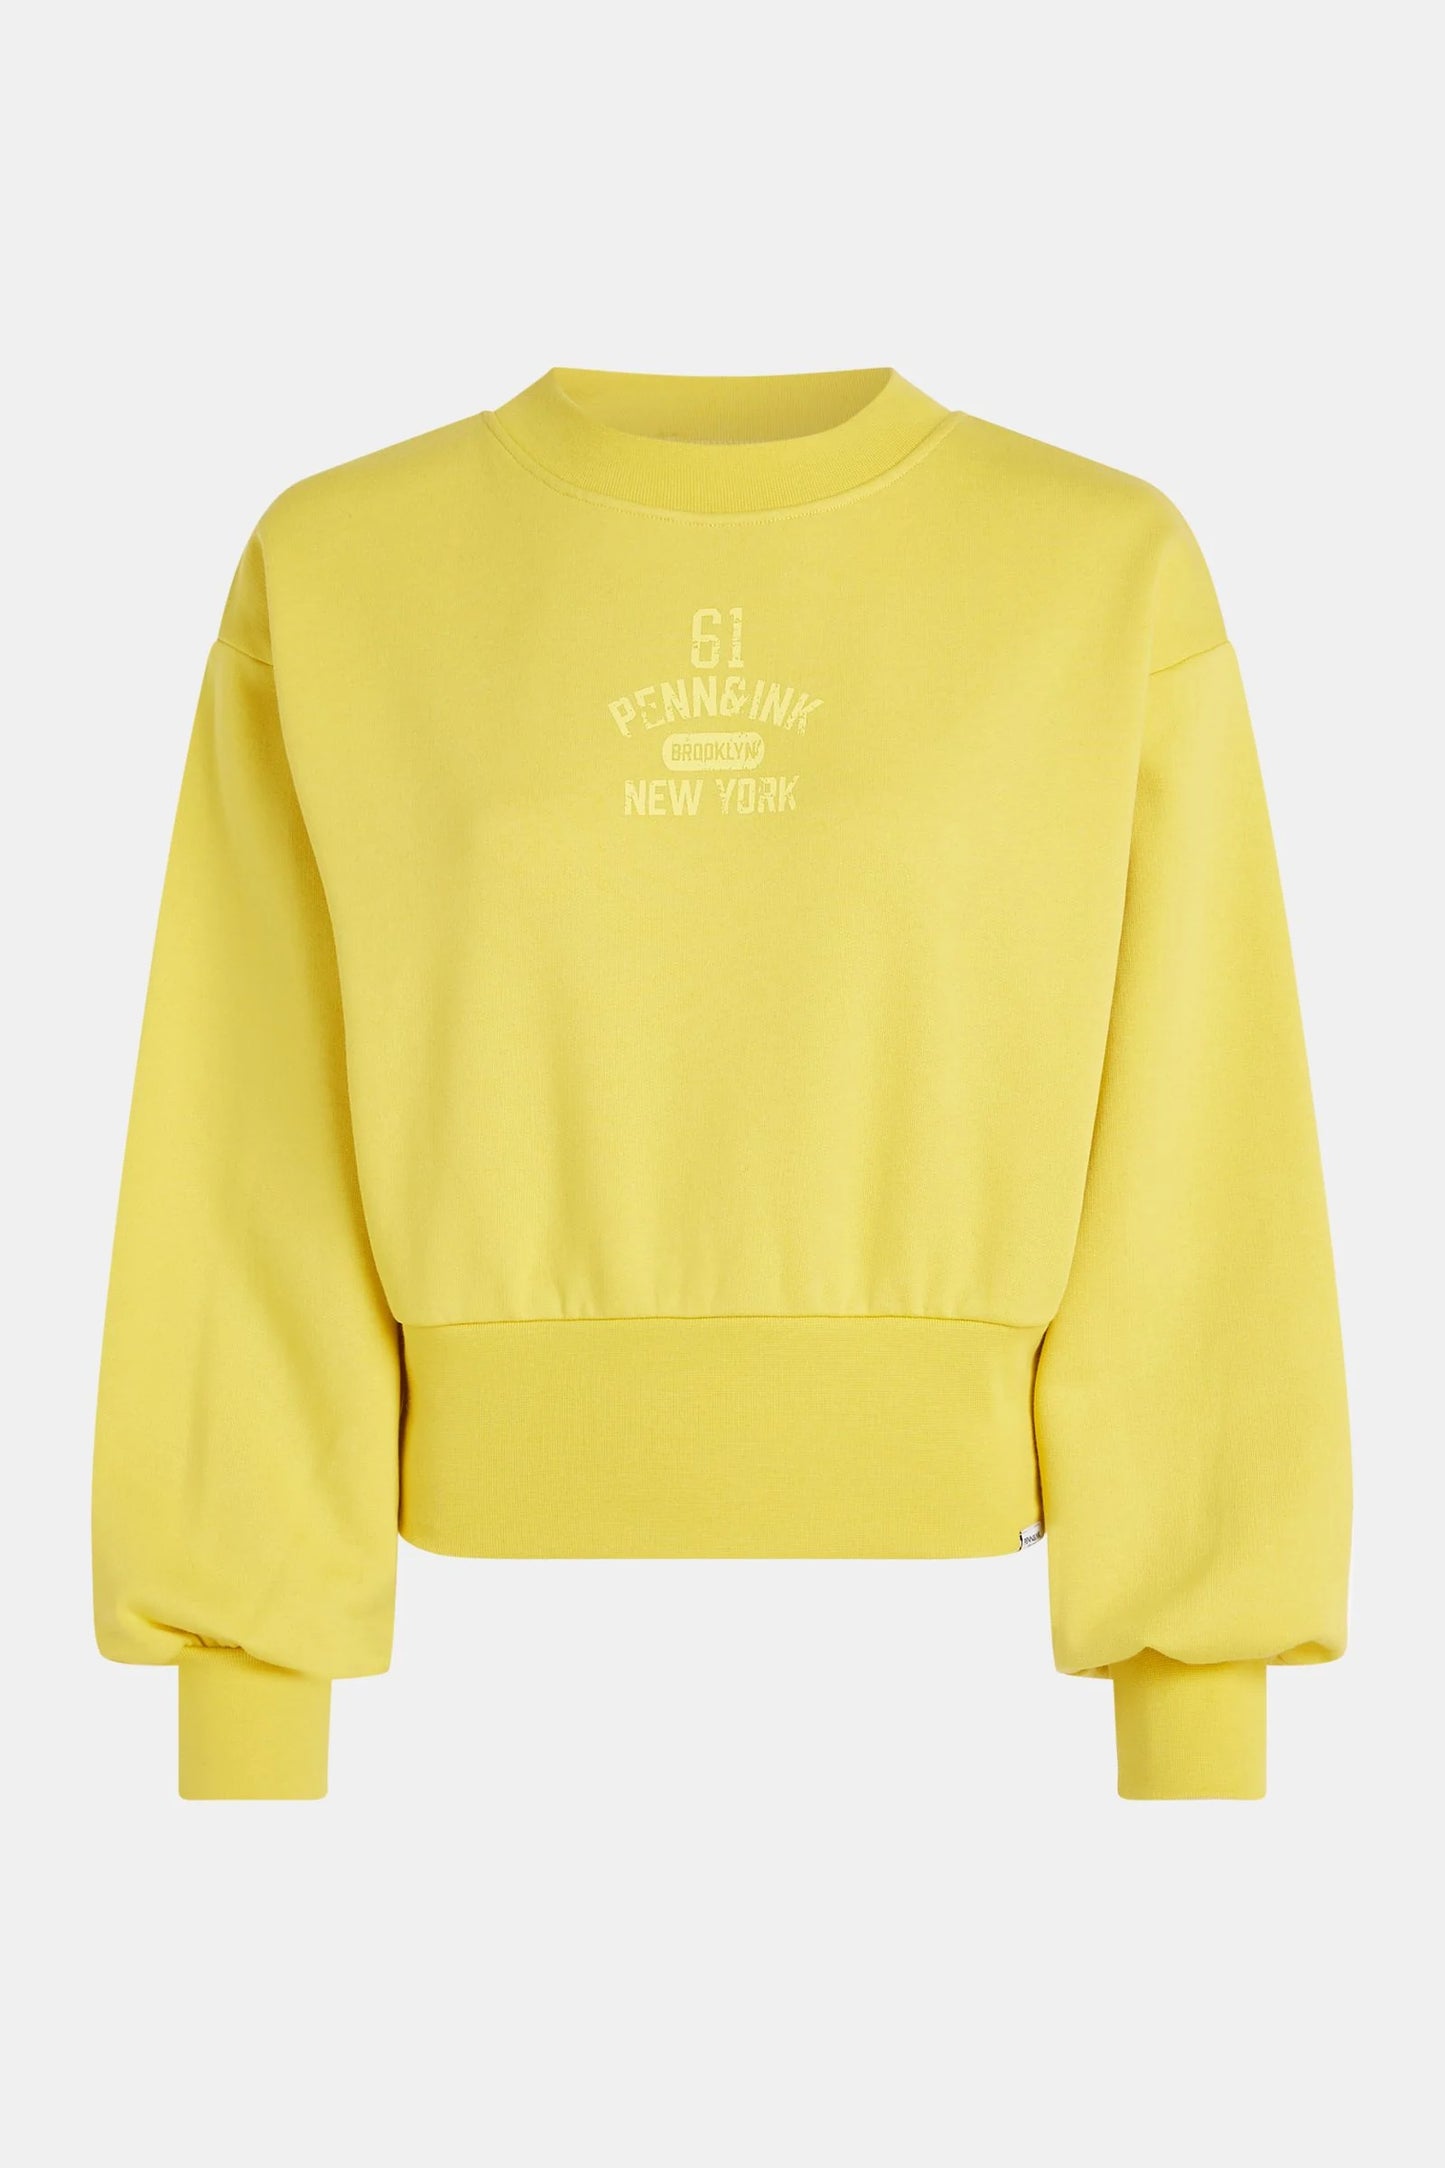 Penn & Ink | Sunflower Sweater